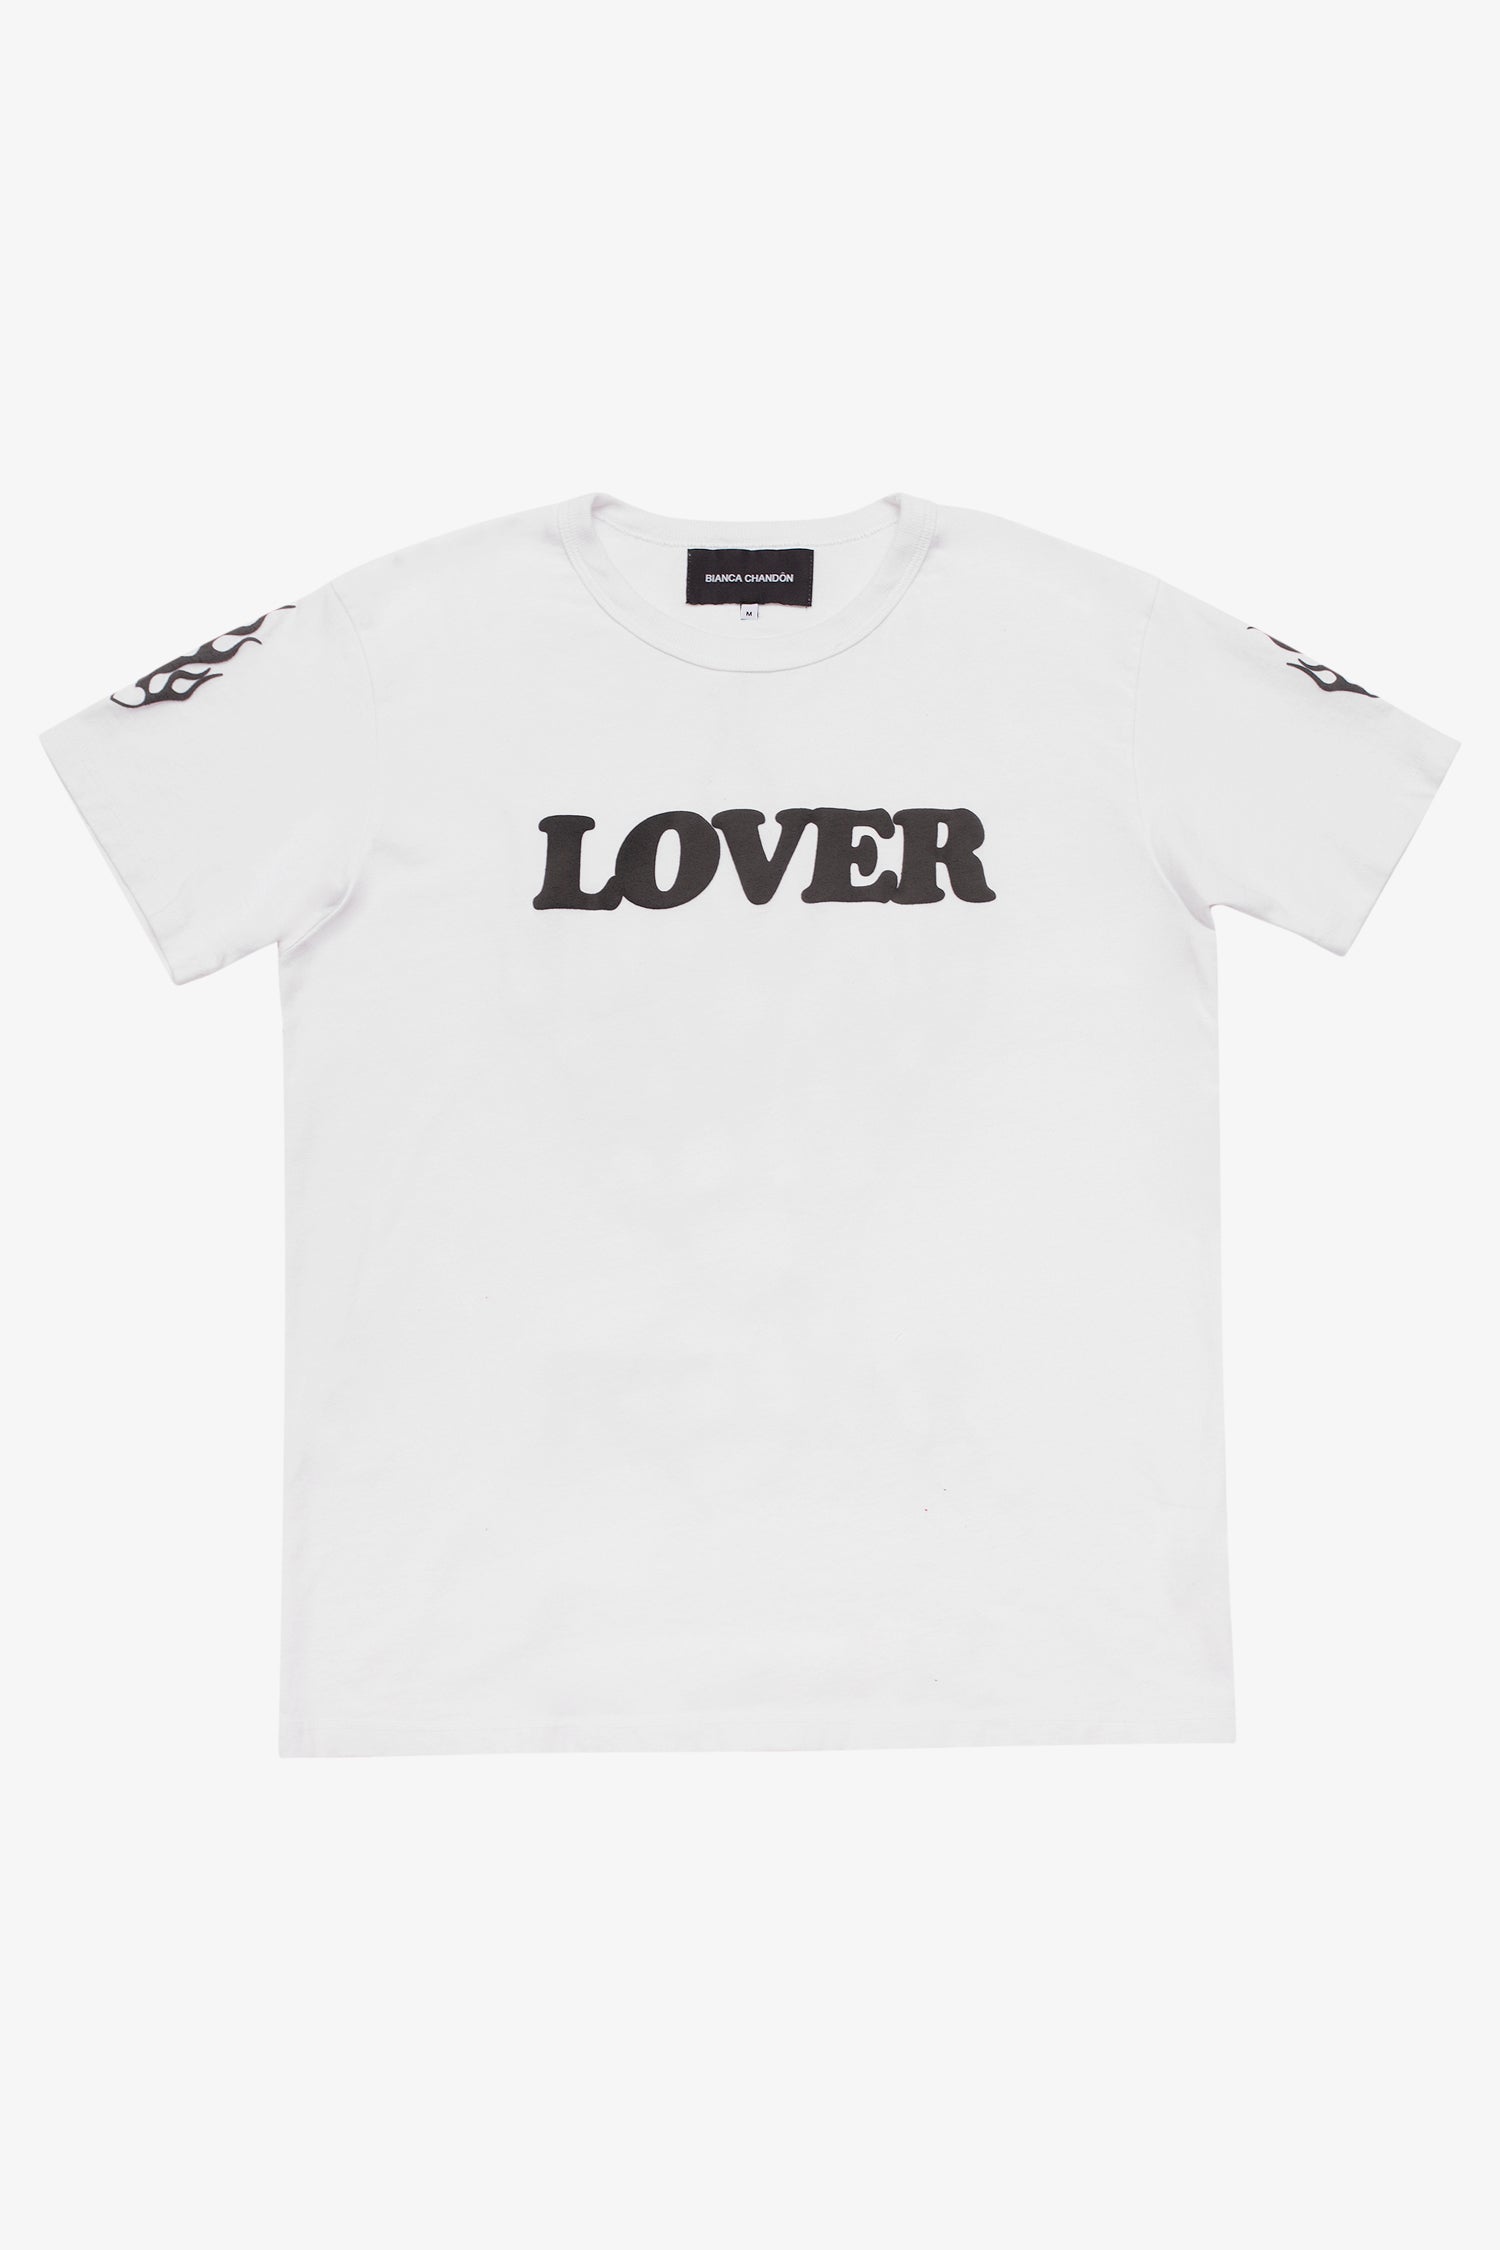 Selectshop FRAME - BIANCA CHANDON Lover T-Shirt T-Shirts Dubai